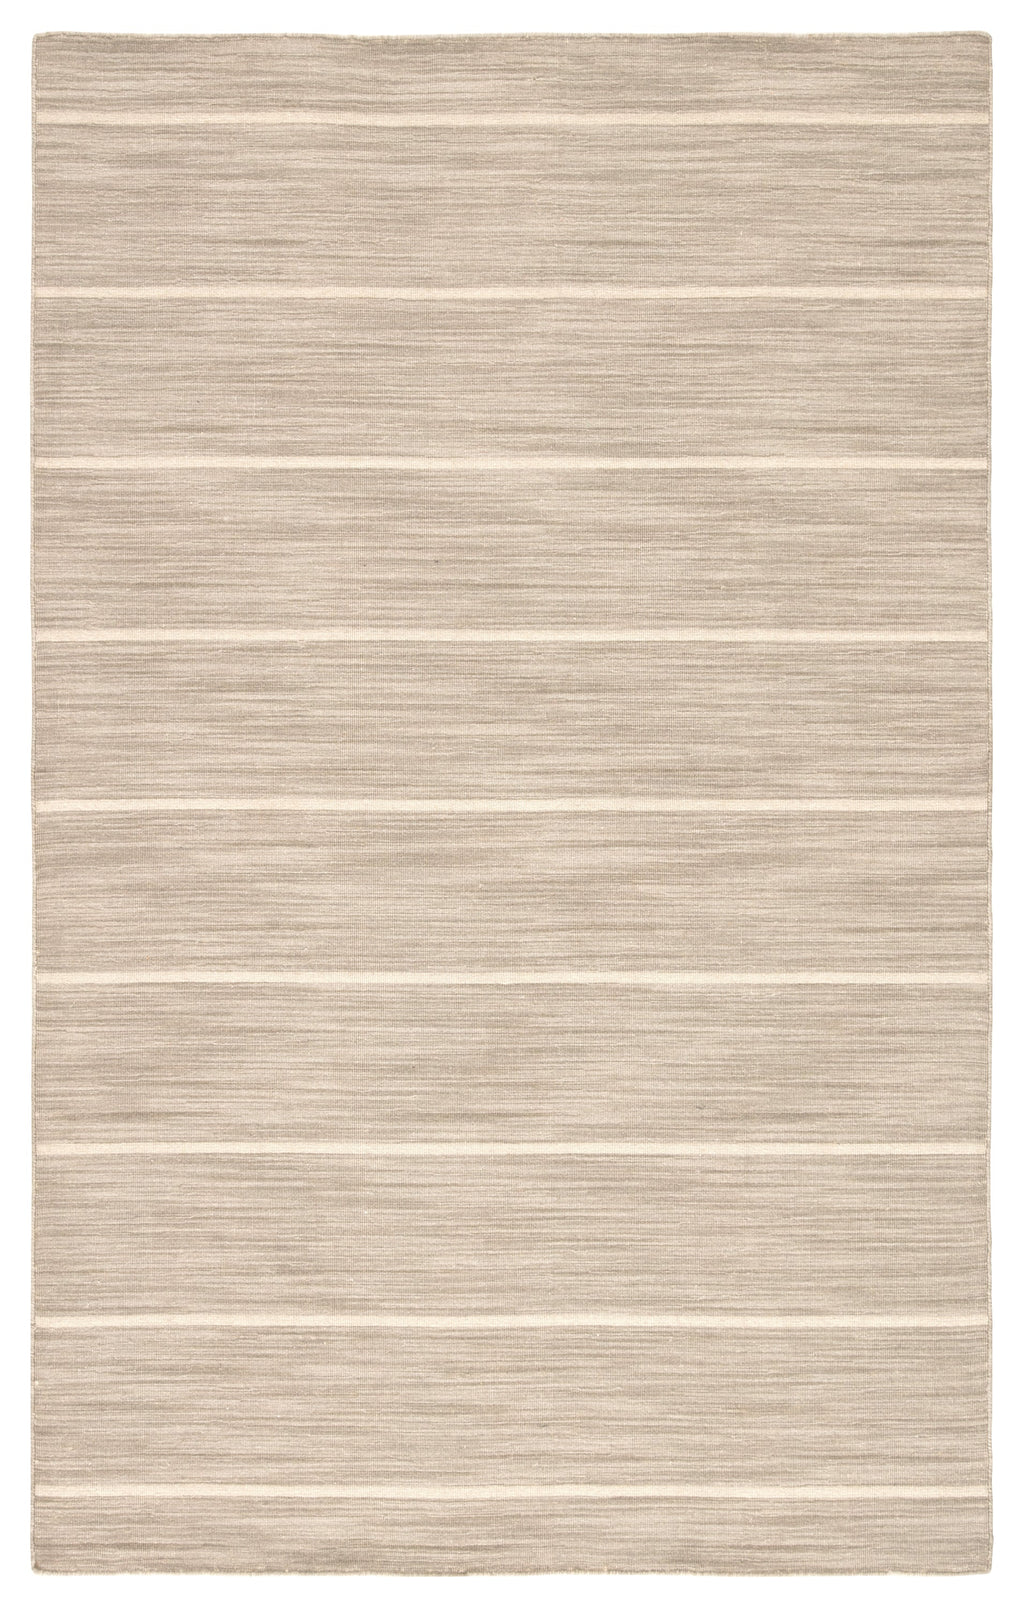 cape cod stripe rug in paloma egret design by jaipur 1